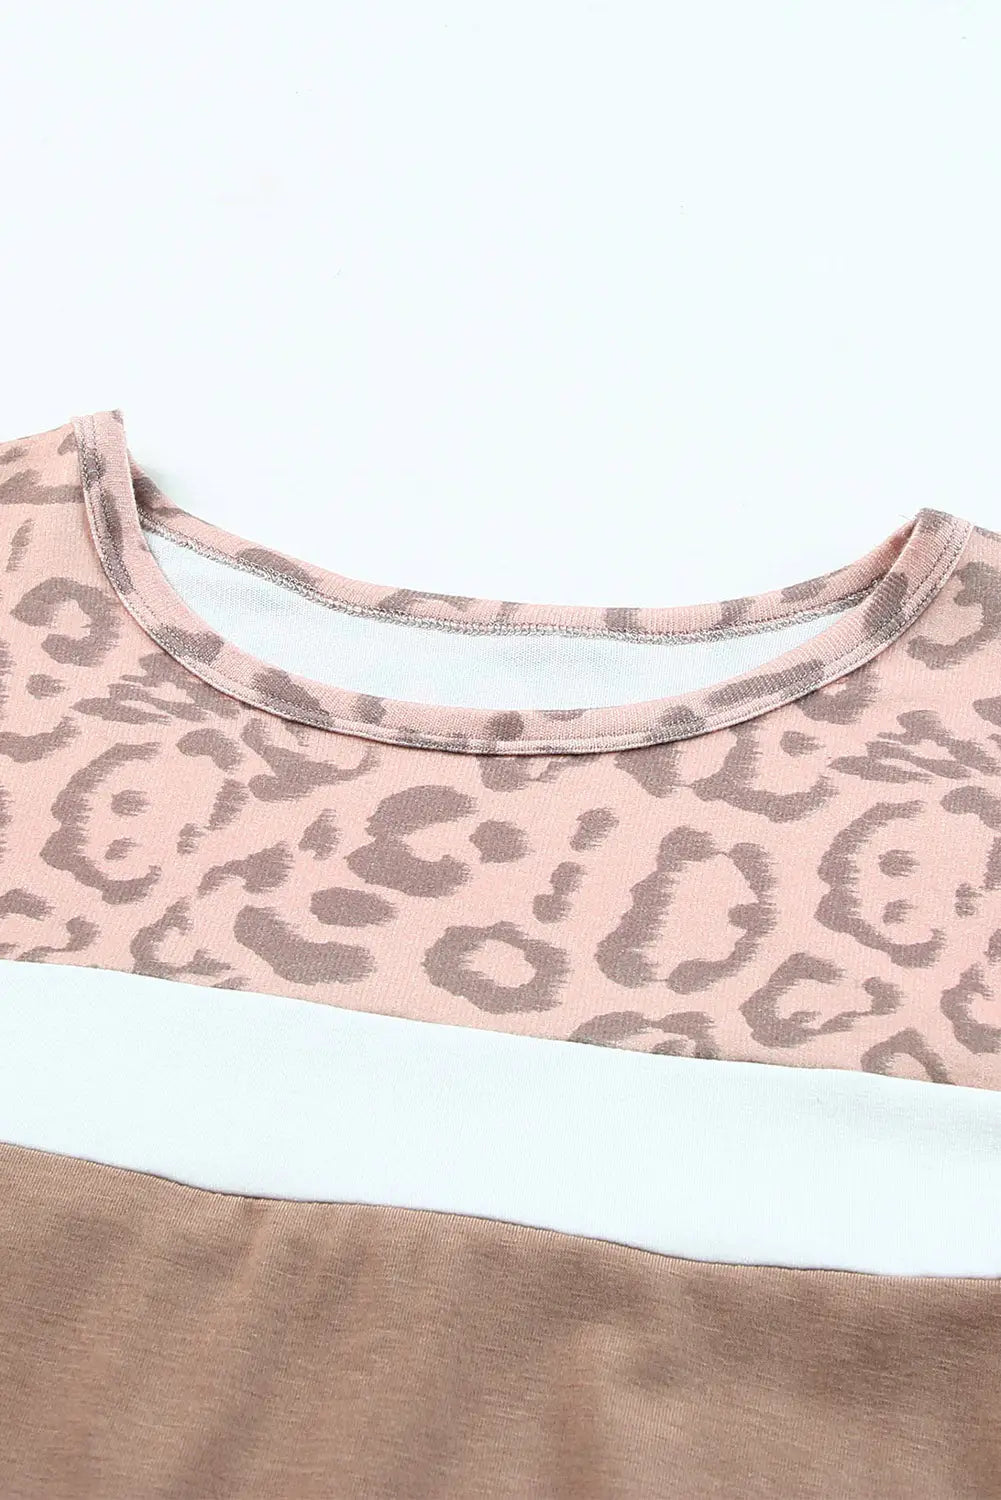 Khaki leopard yoke color block plus size top